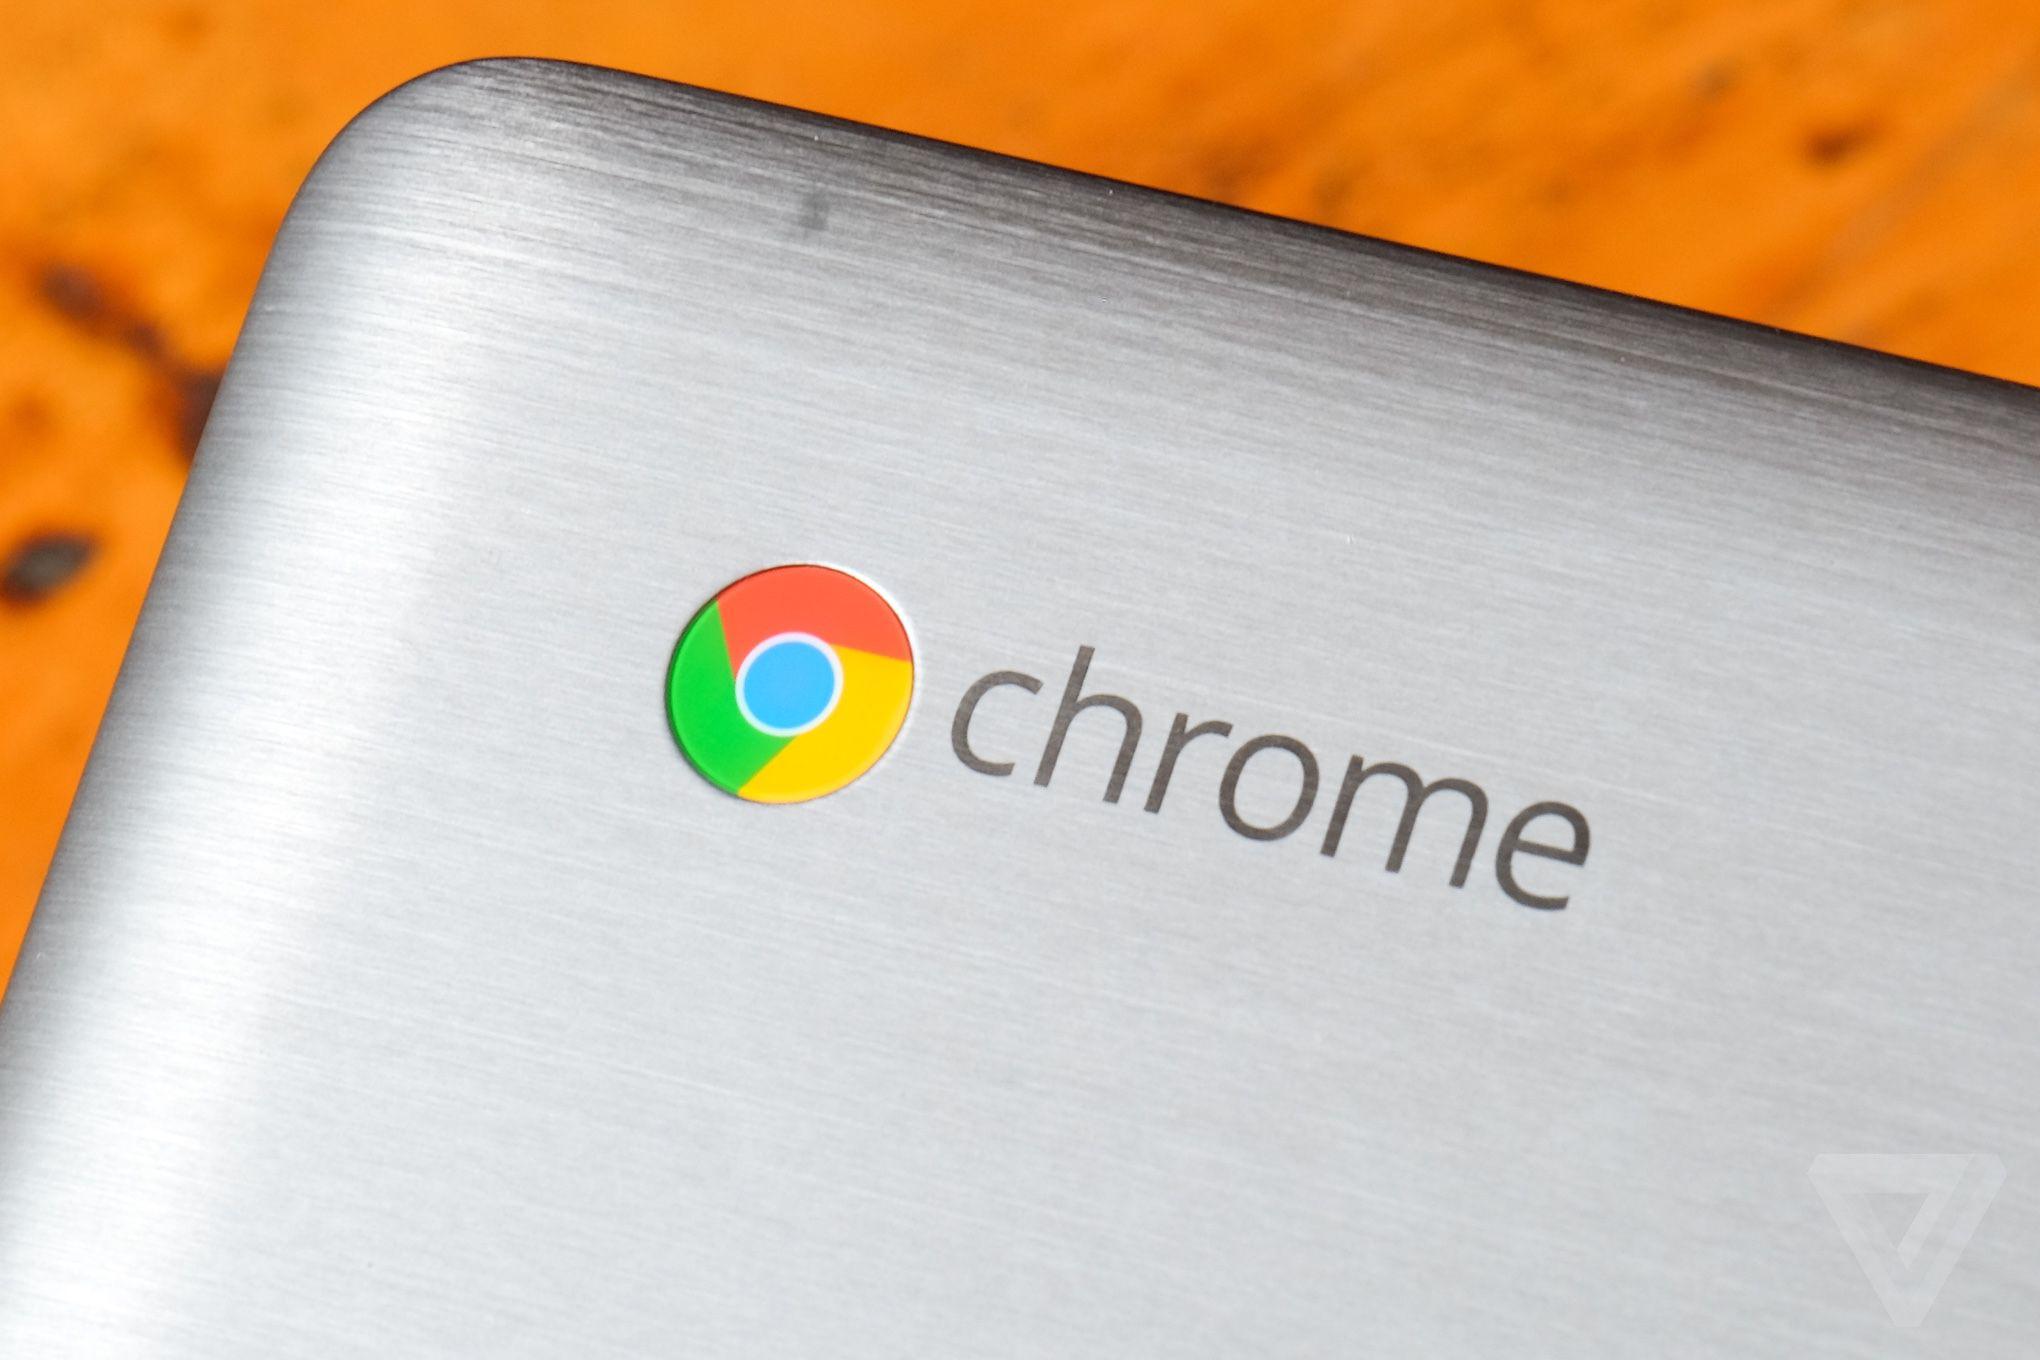 Google Chromebook Logo - Acer Chromebook 14 review: a good value, but unprepared for